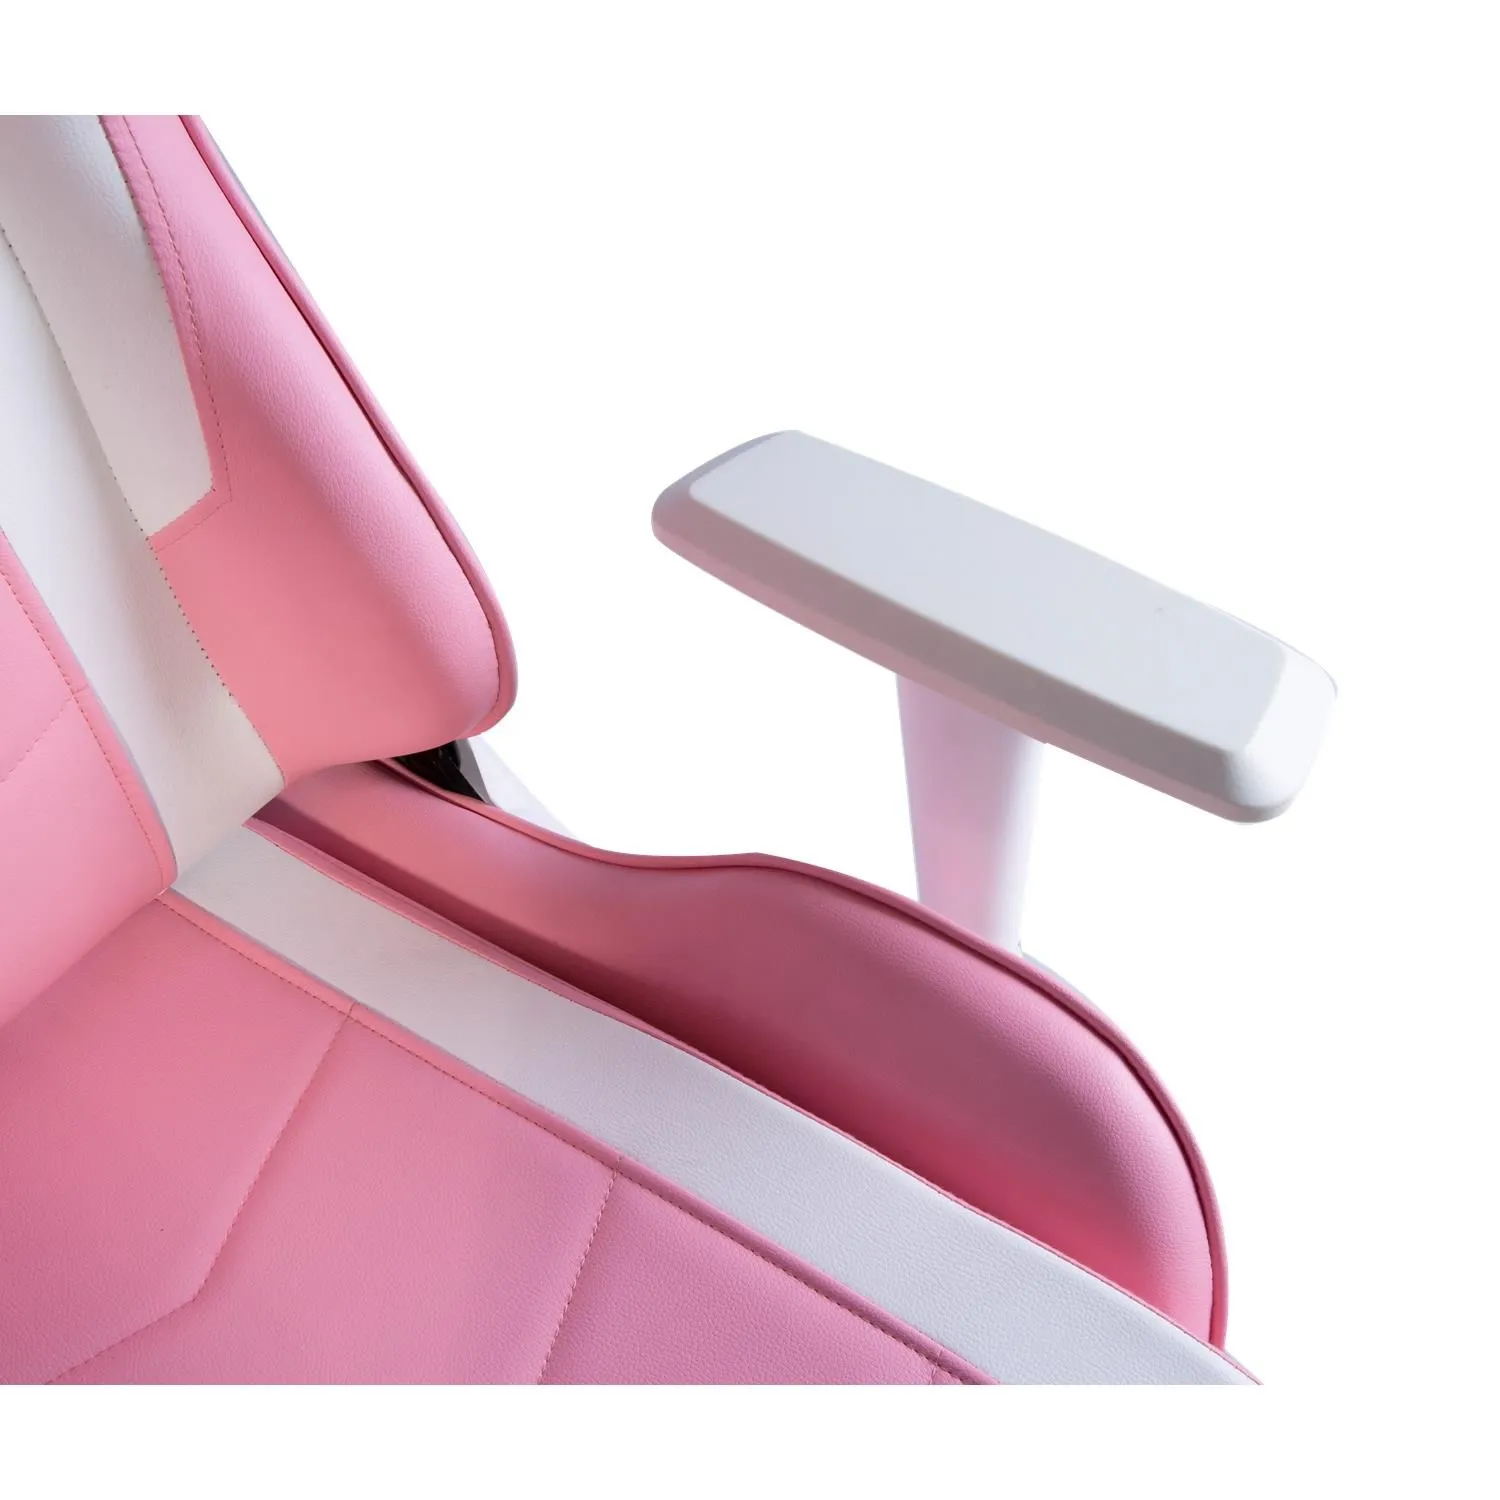 GAMING Stuhl ergonomisch, PCH80